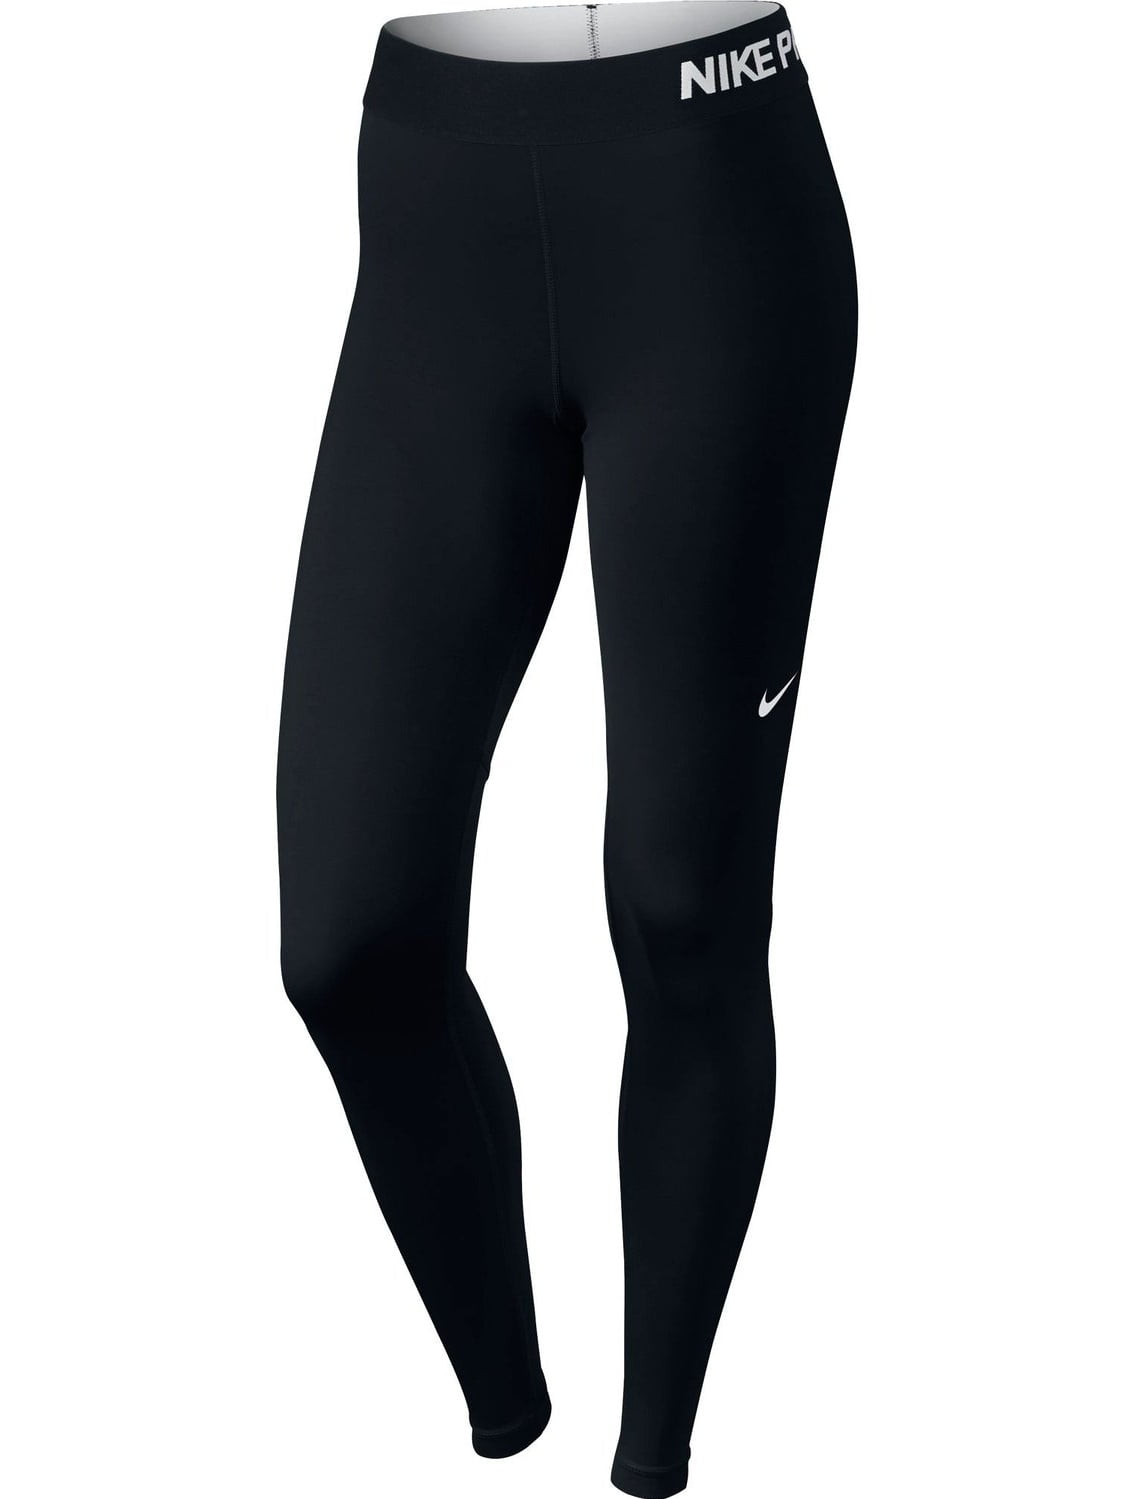 Nike Womens Pro Cool Training Tights Black/White - Walmart.com